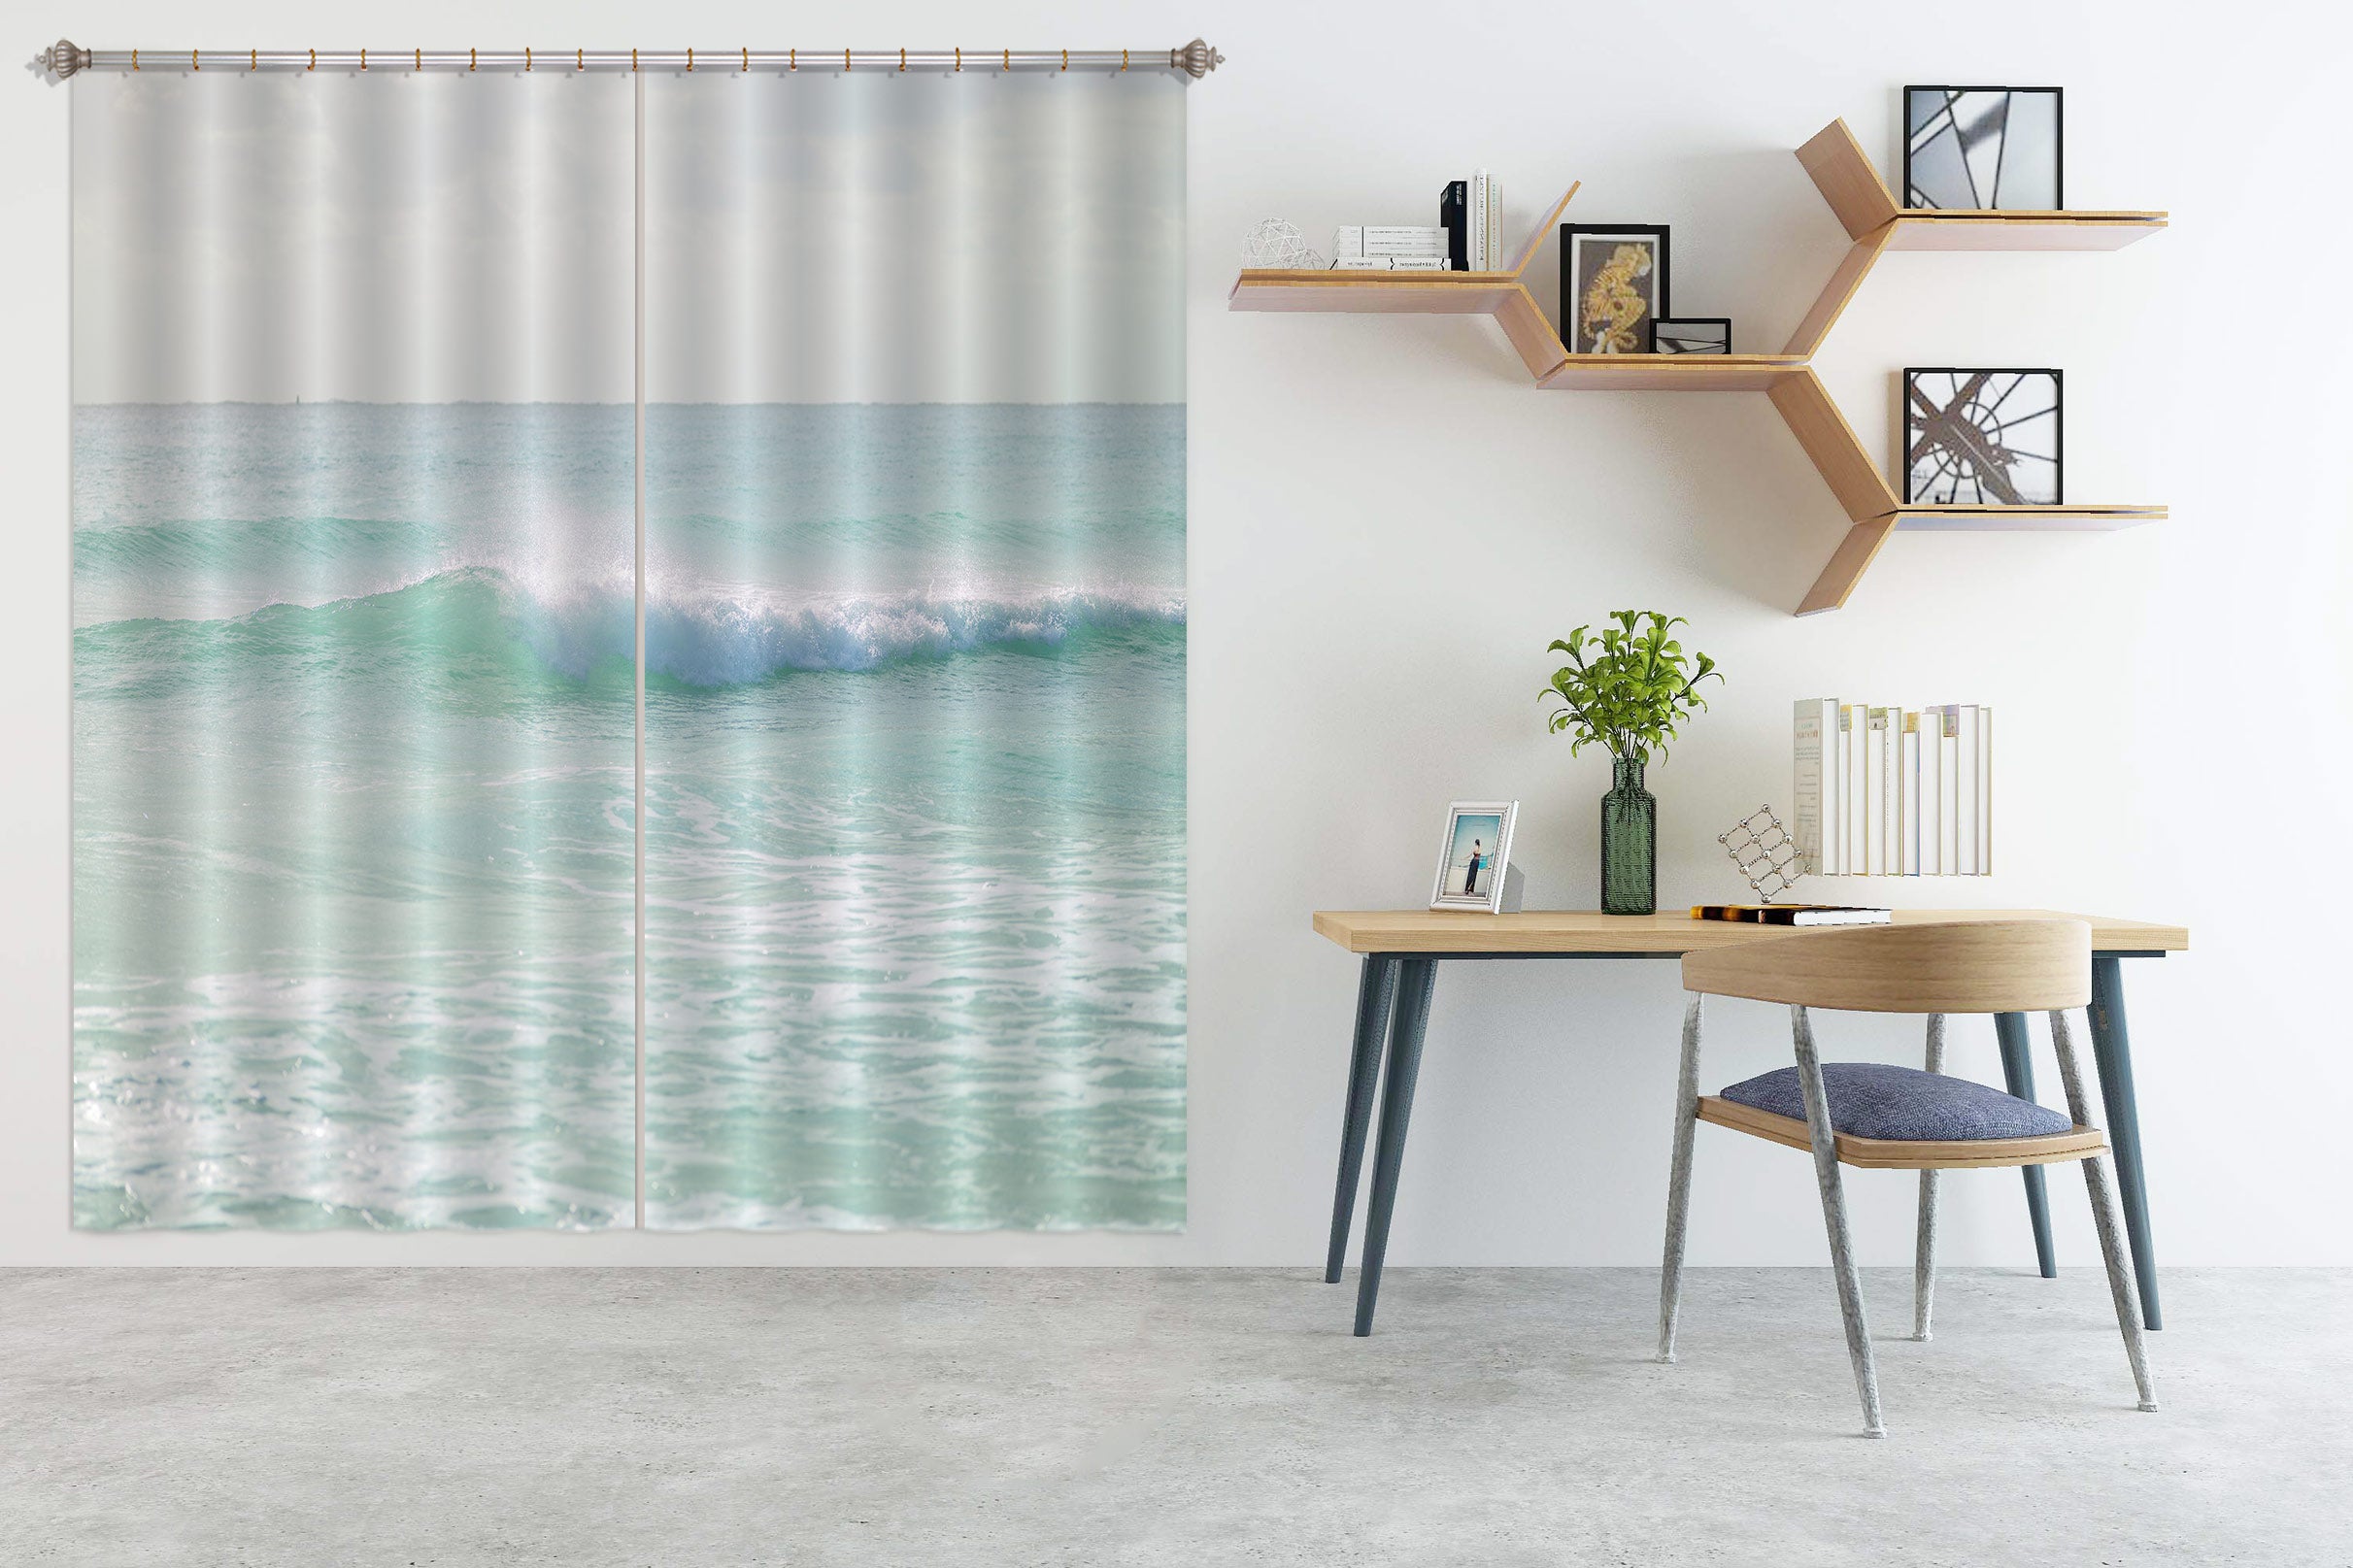 3D Ocean Waves 6535 Assaf Frank Curtain Curtains Drapes